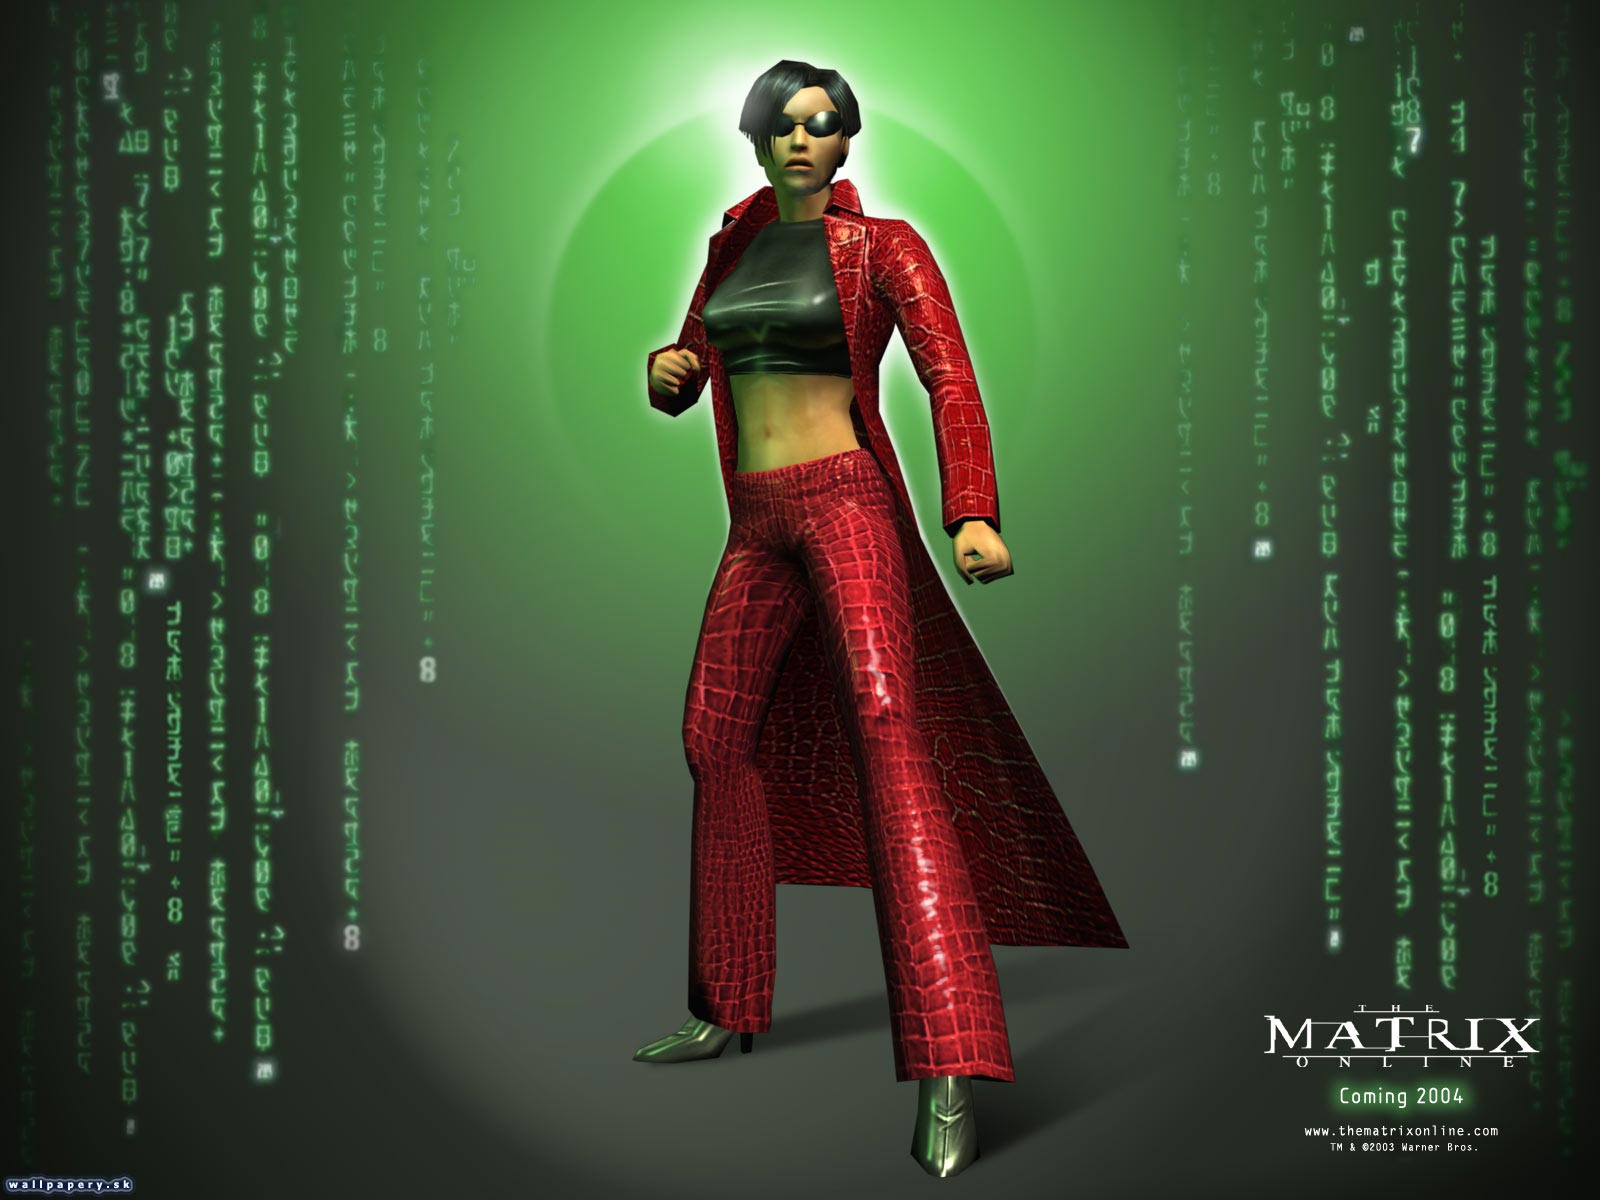 The Matrix Online - wallpaper 1